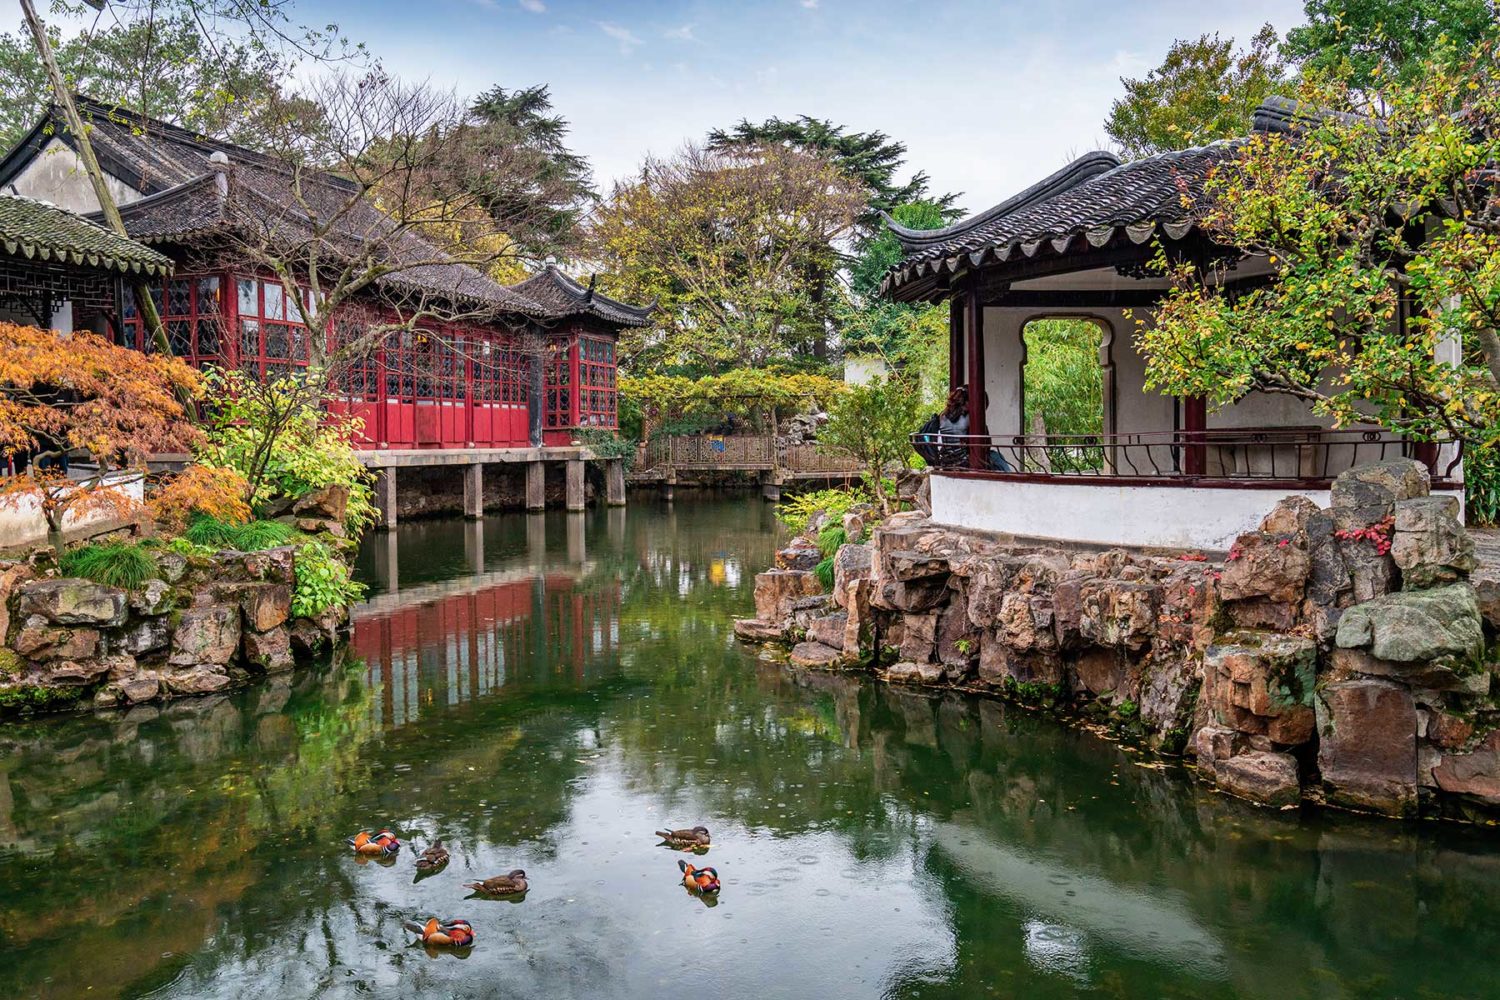 Humble Administrator's Garden of Suzhou